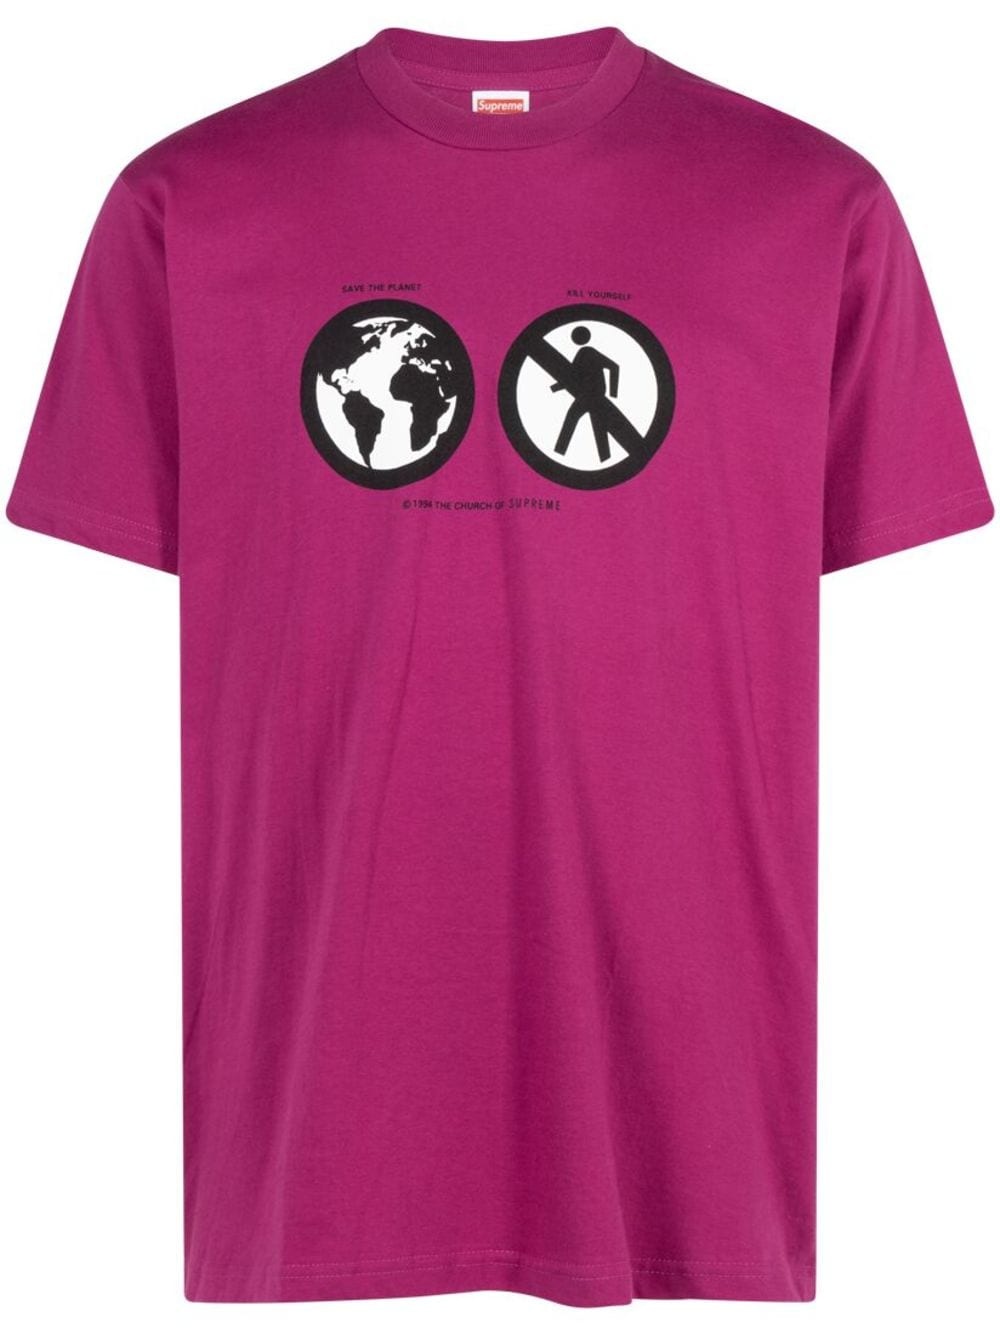 Save The Planet cotton T-shirt - 1